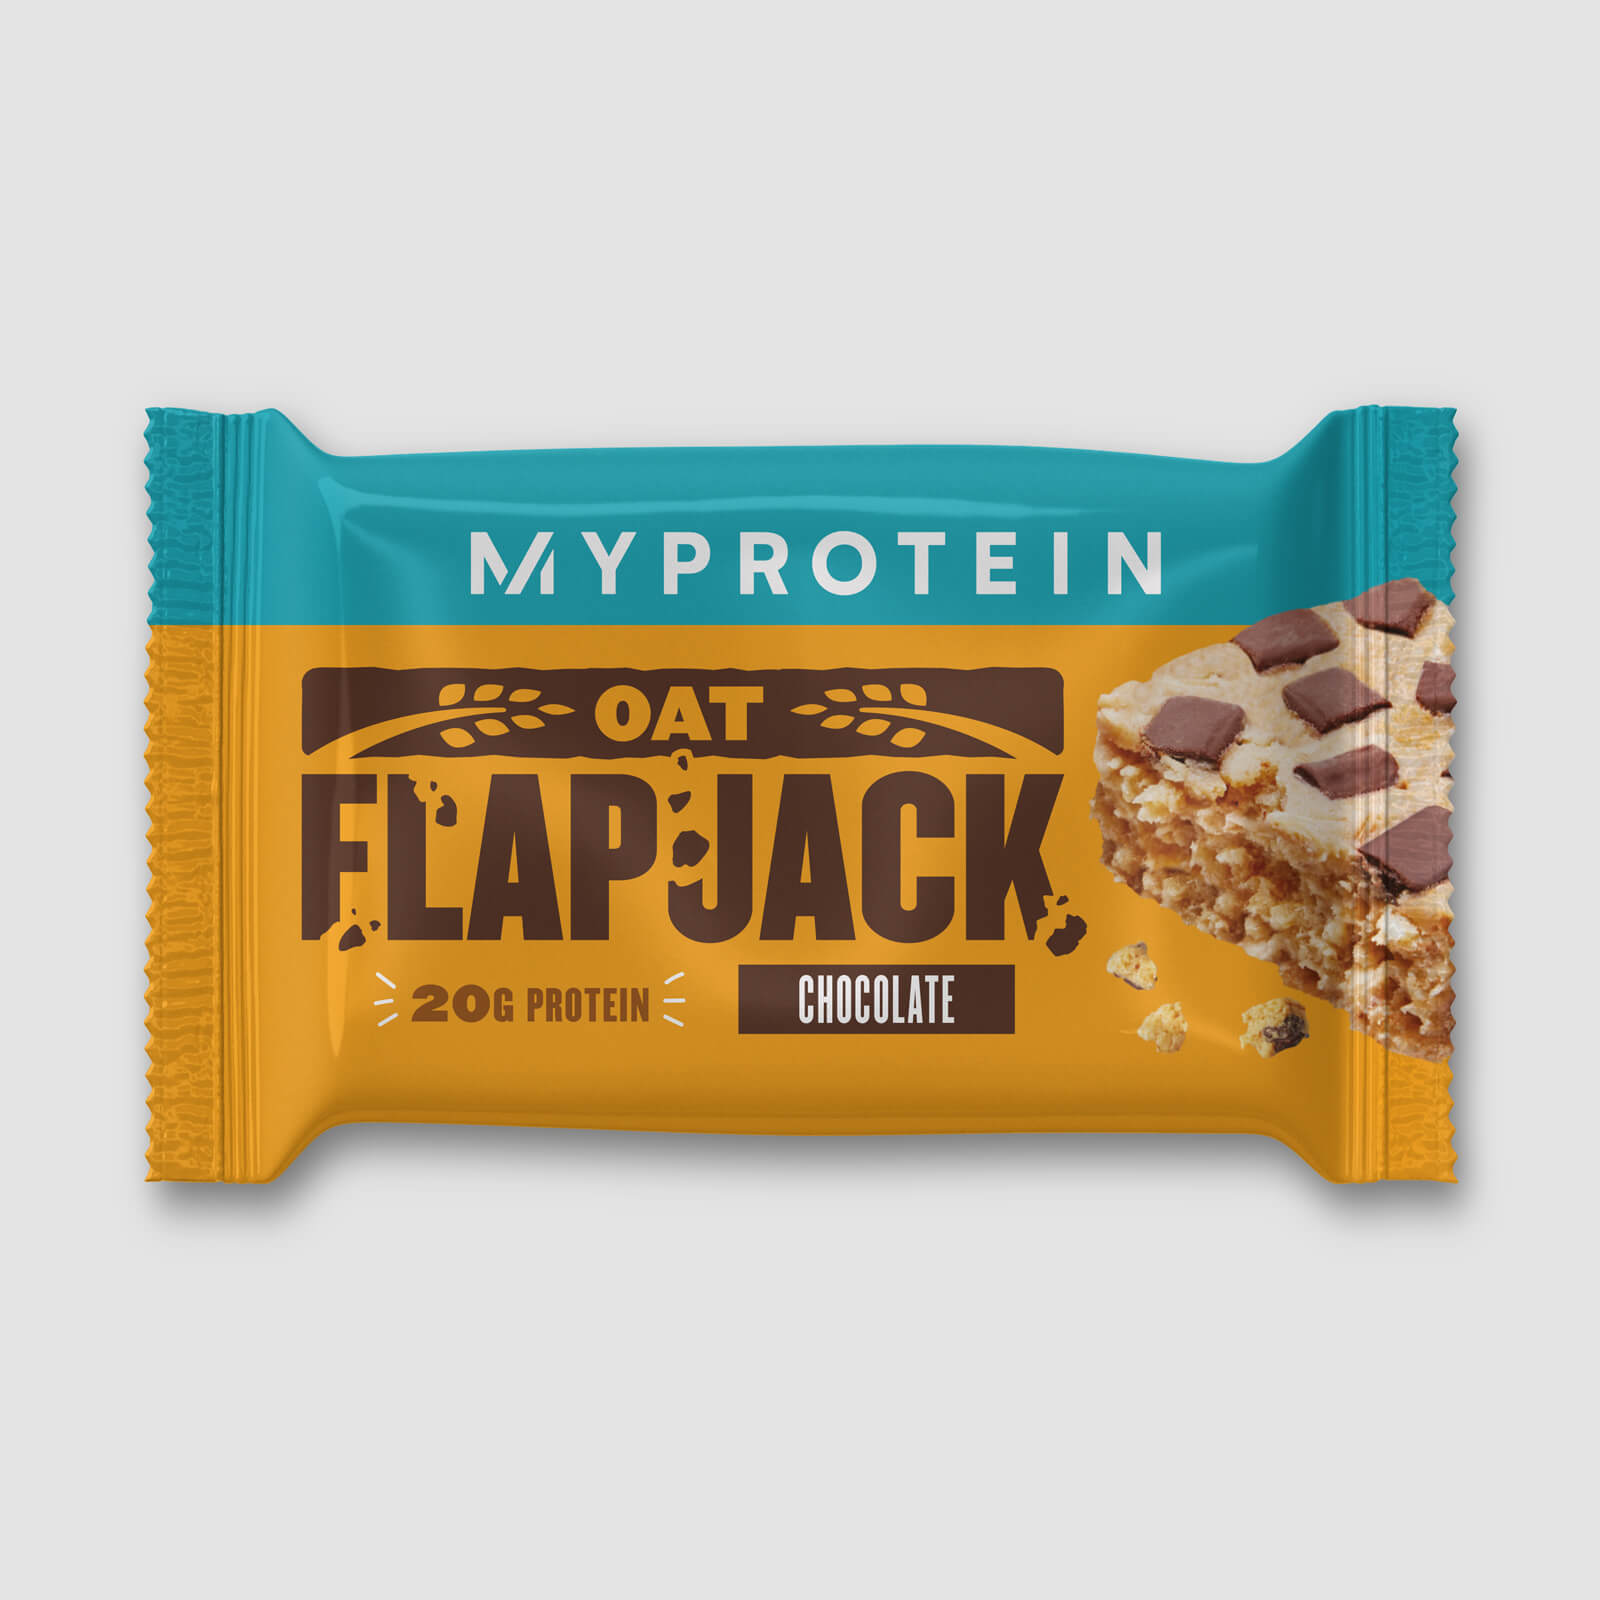 Myprotein Protein Flapjack (Sample) - Chocolate